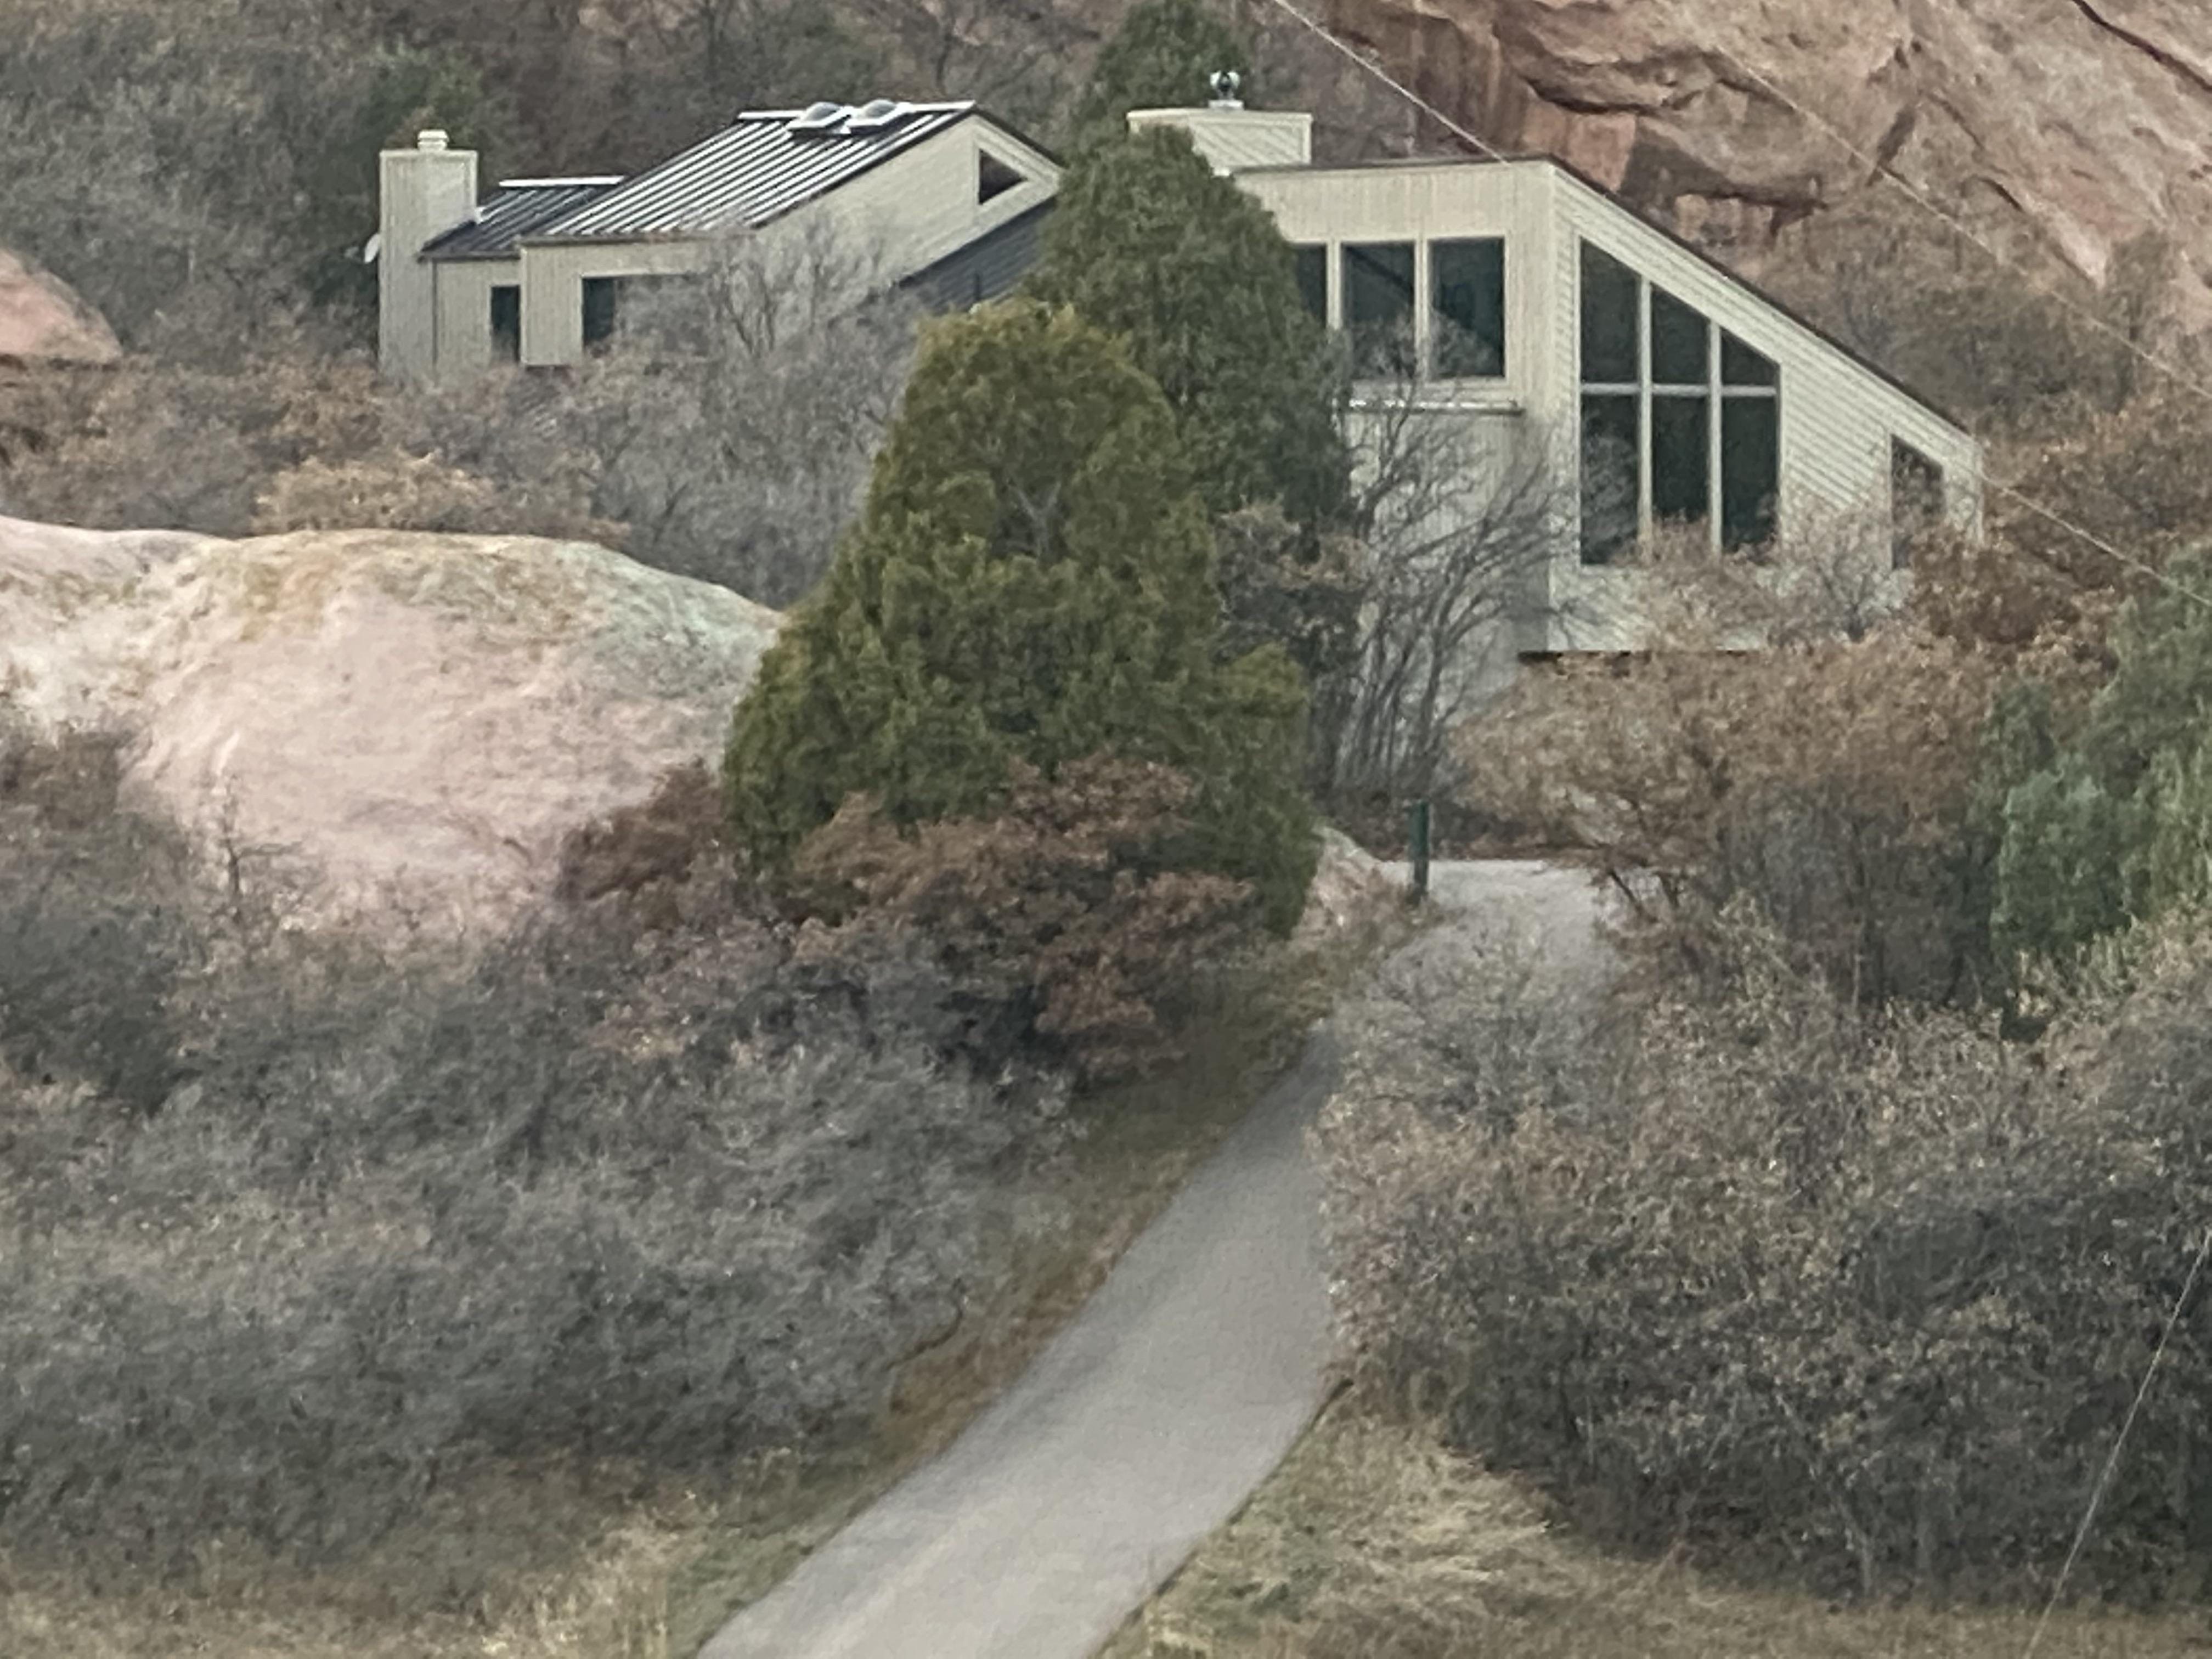 Photo of Dylan Klebold's home in Klebold, Colorado